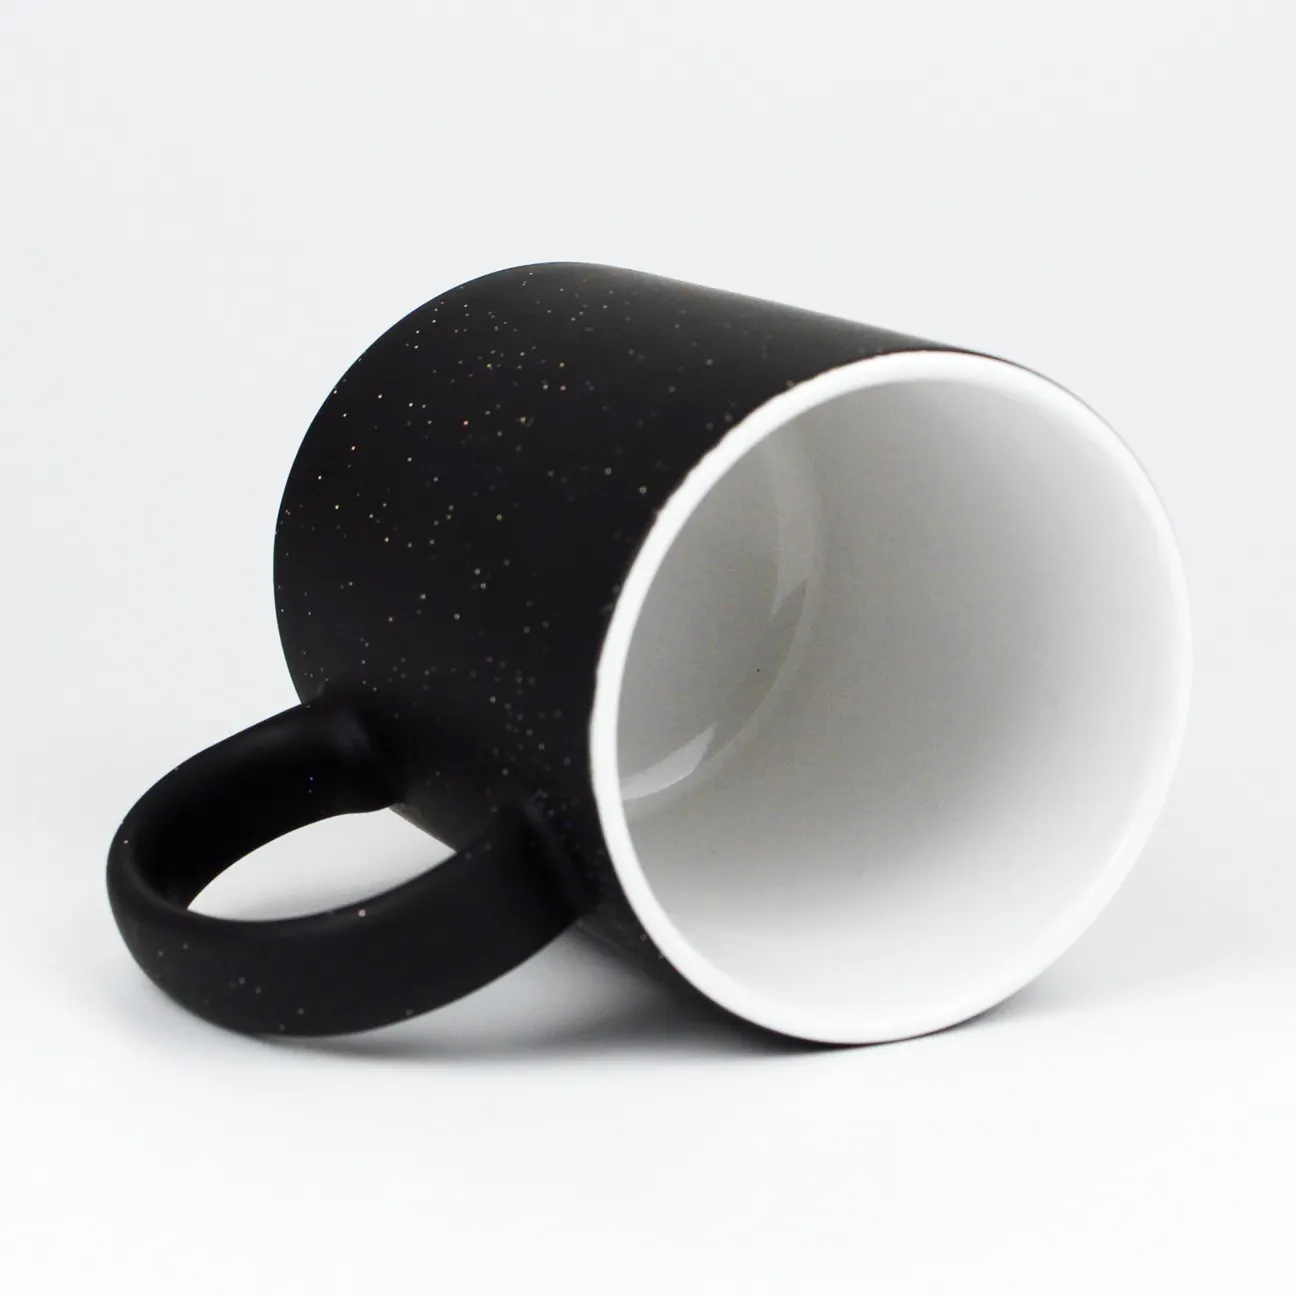 Manufacturer Wholesale Sublimation travel mugs for hot drinks gift set ceramic mugs coffee mug